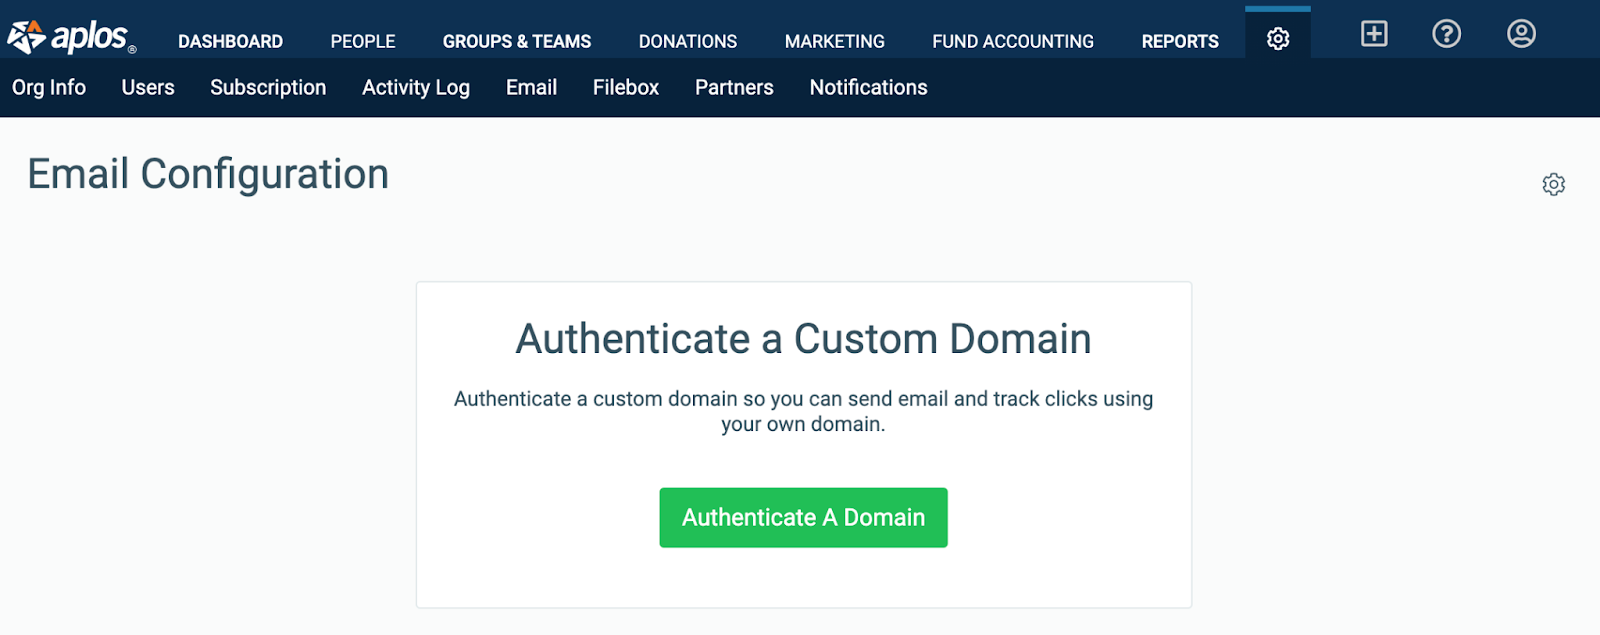 Authenticate a Custom Domain